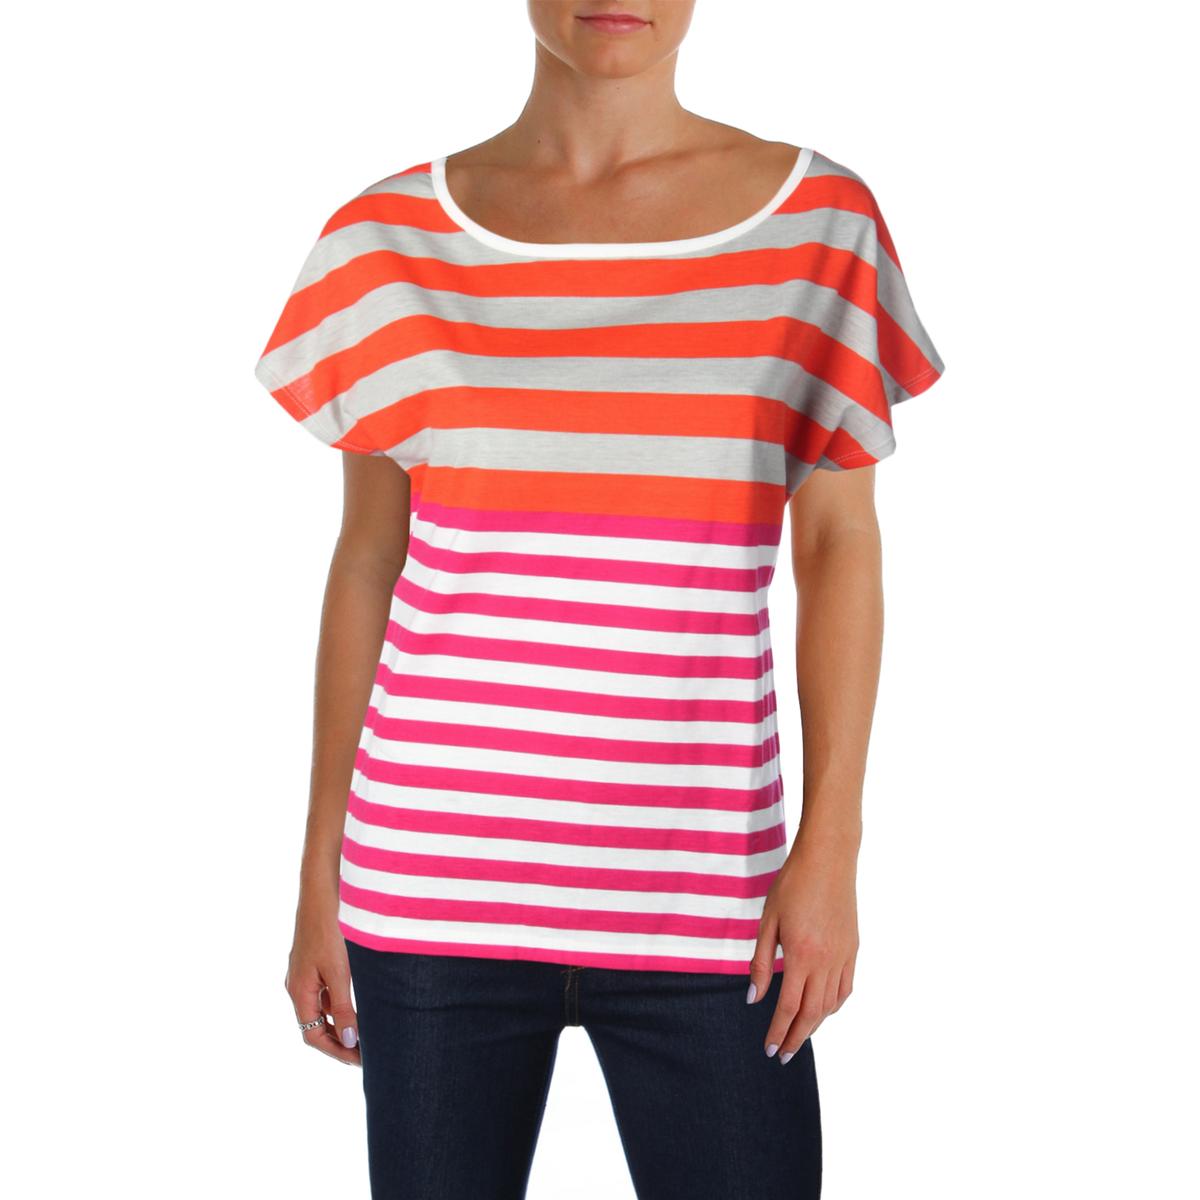 Avon Womens Orange Casual Cotton Striped T-Shirt Top M BHFO 0014 ...